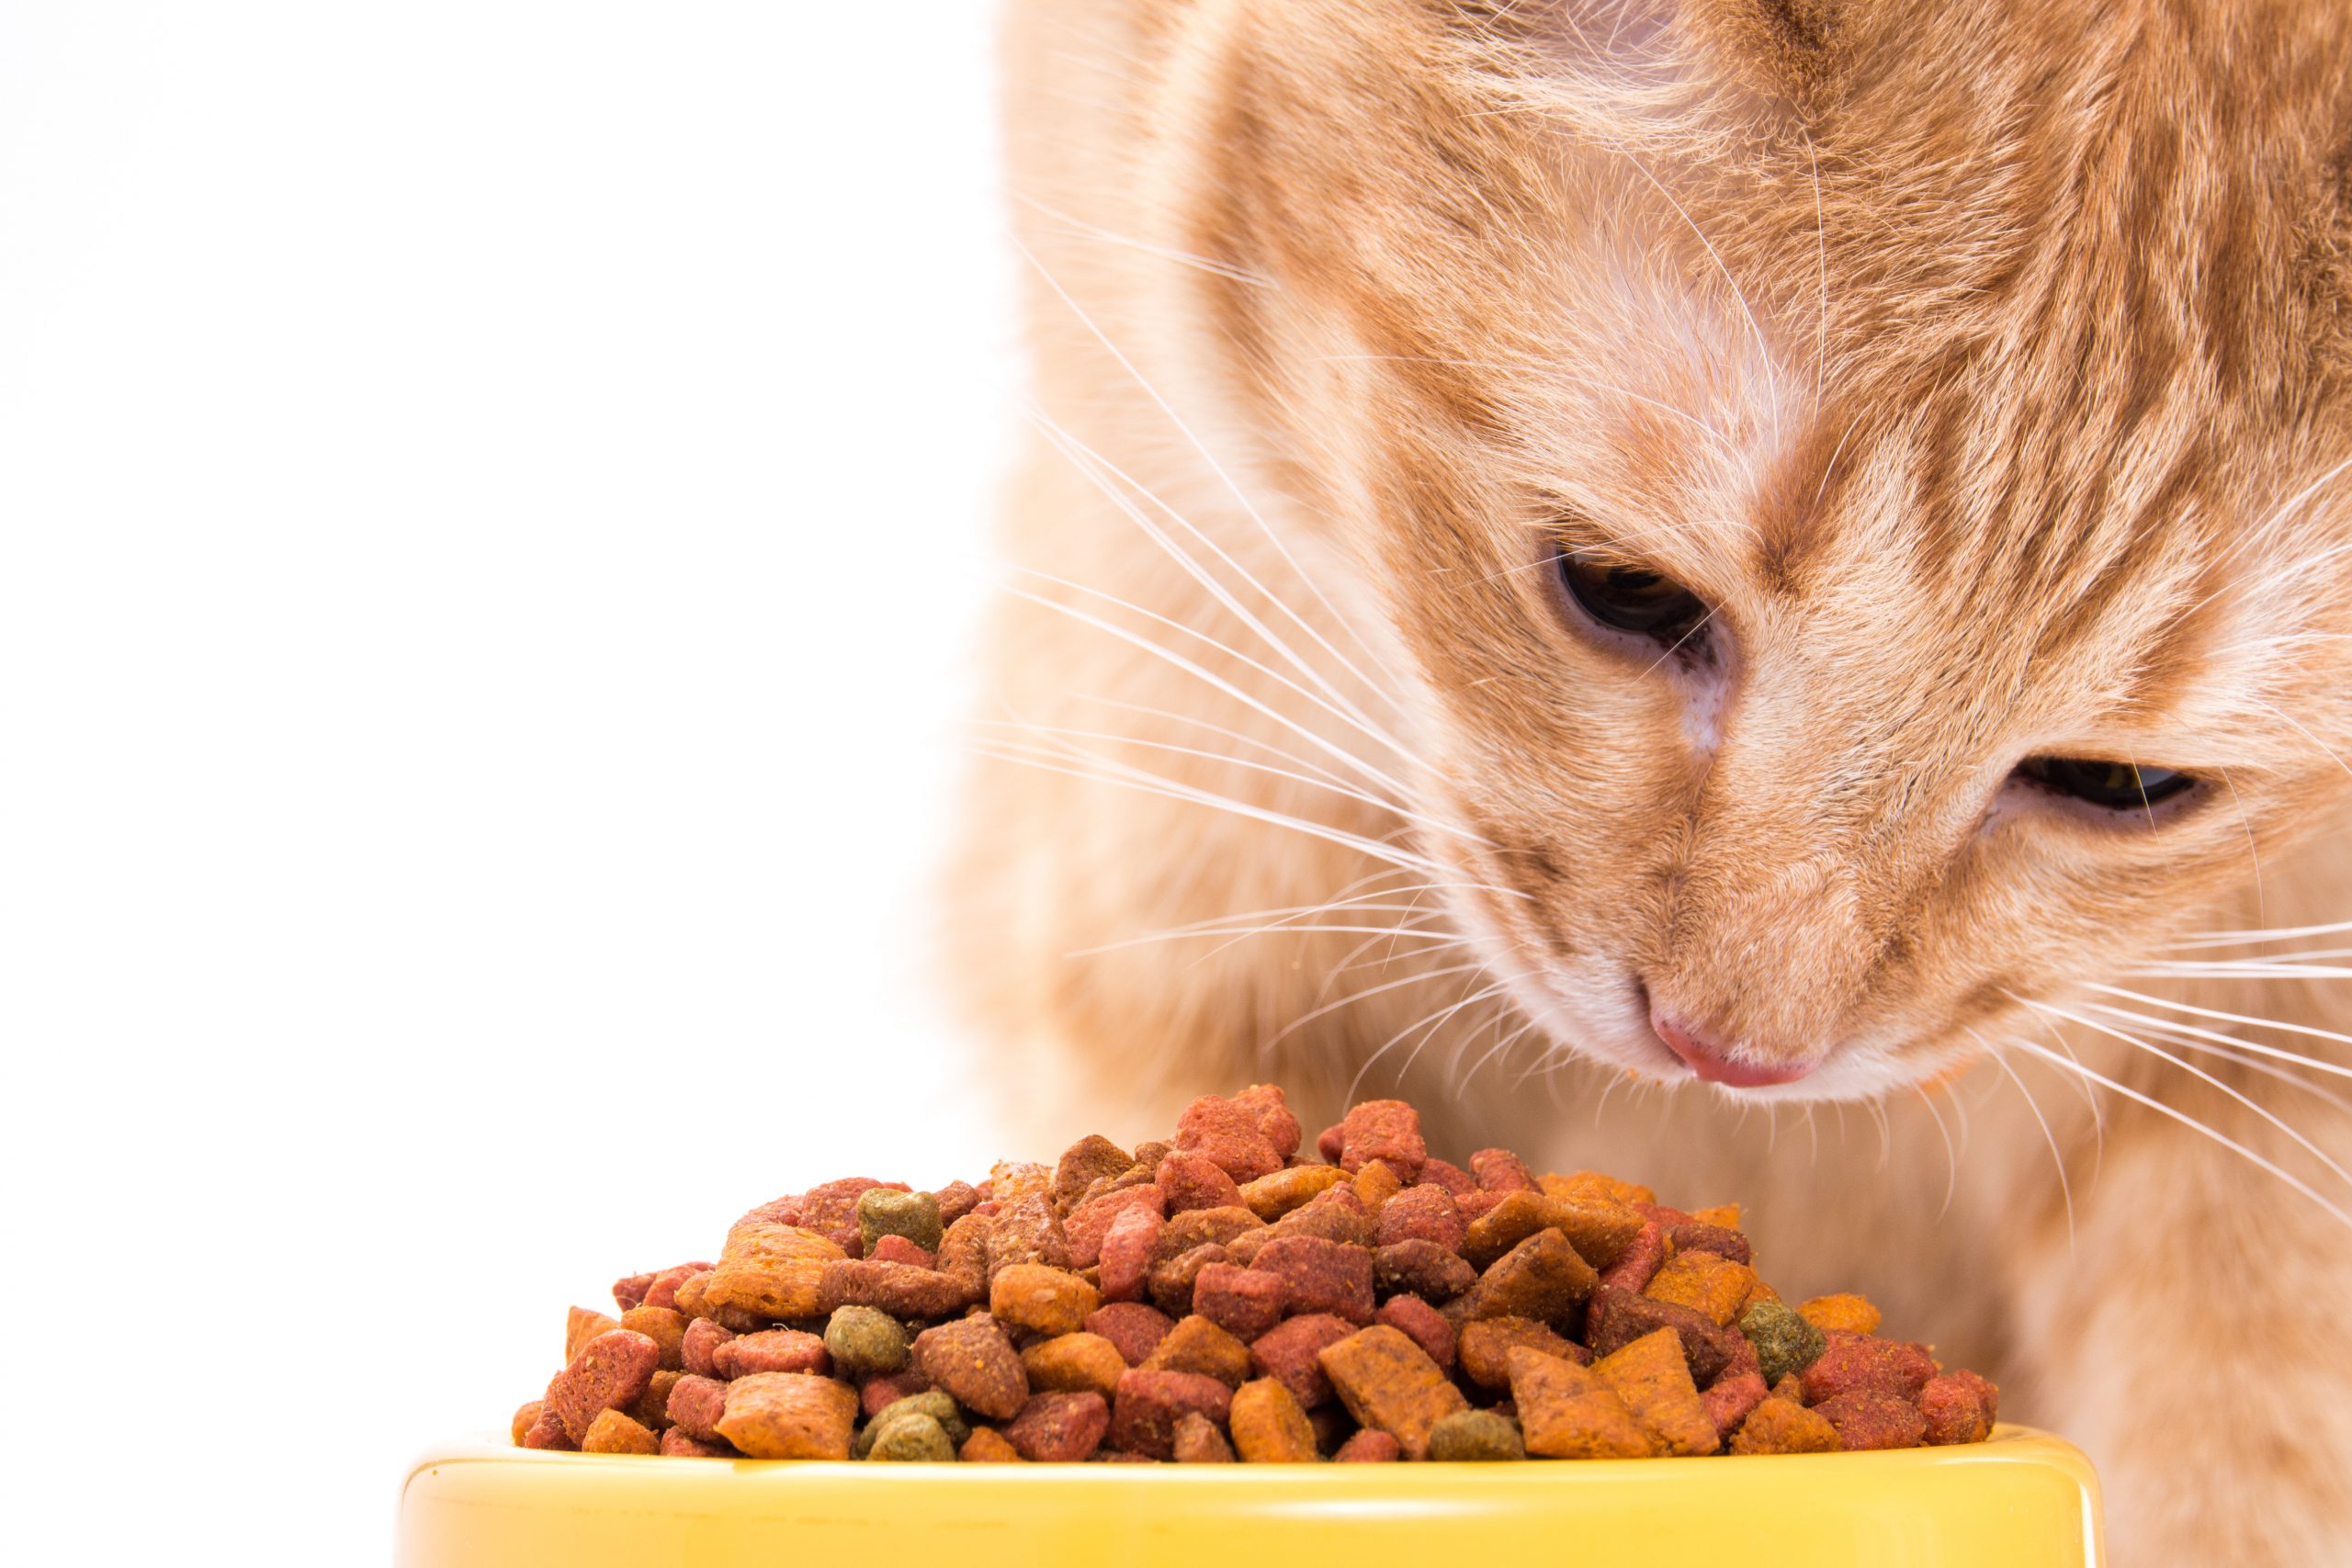 Gelatin: Potential to improve pet food kibbles. Photo: Shutterstock